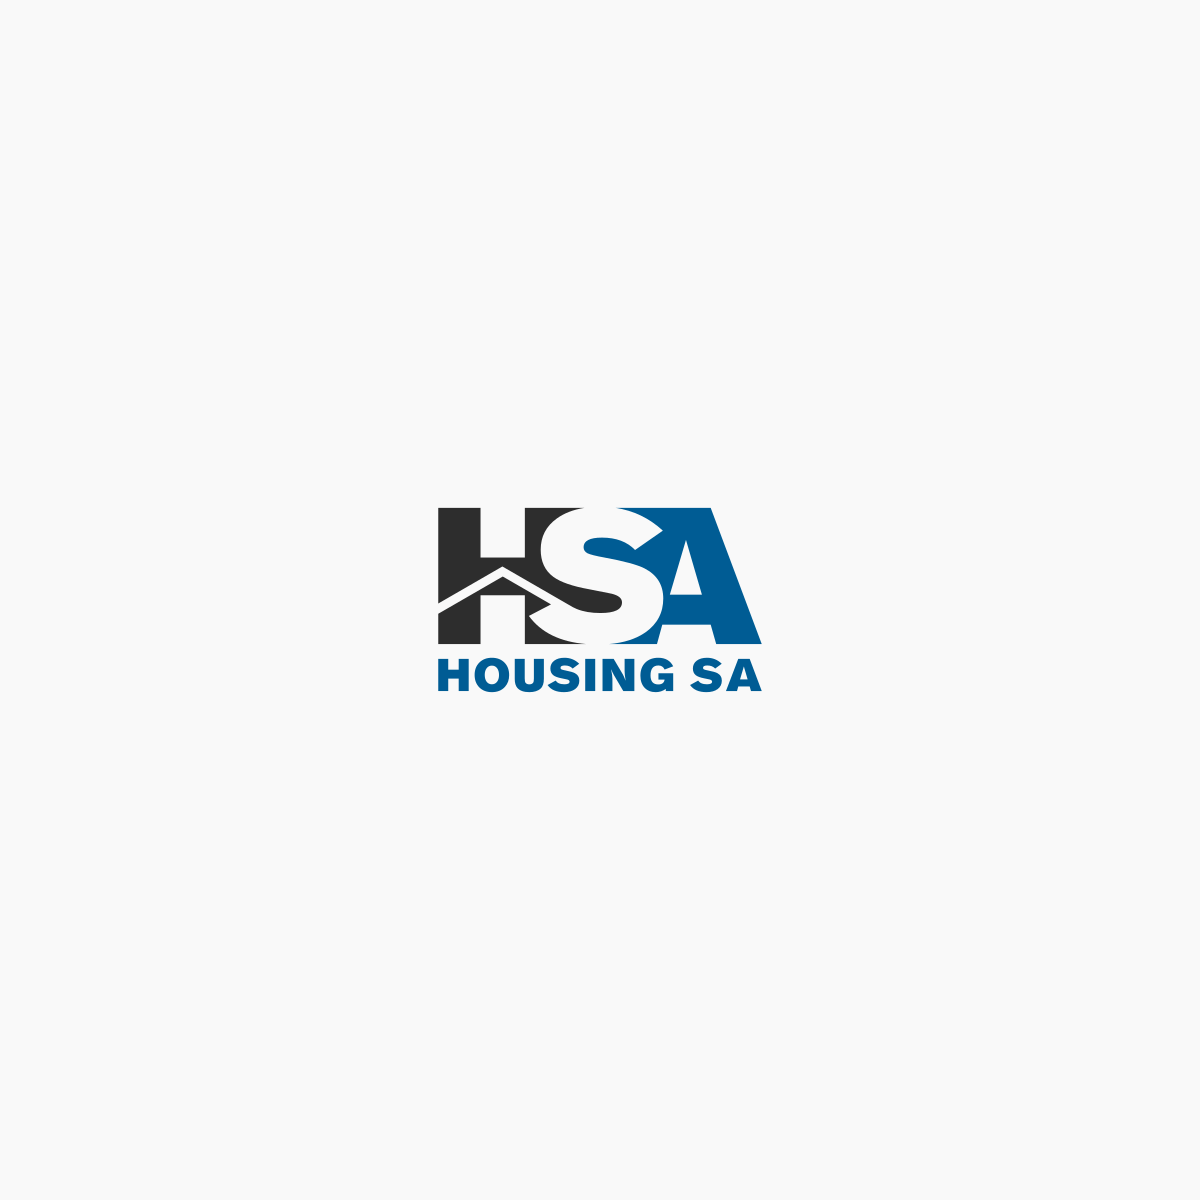 SA Logo - Serious, Modern, Real Estate Development Logo Design for Housing SA